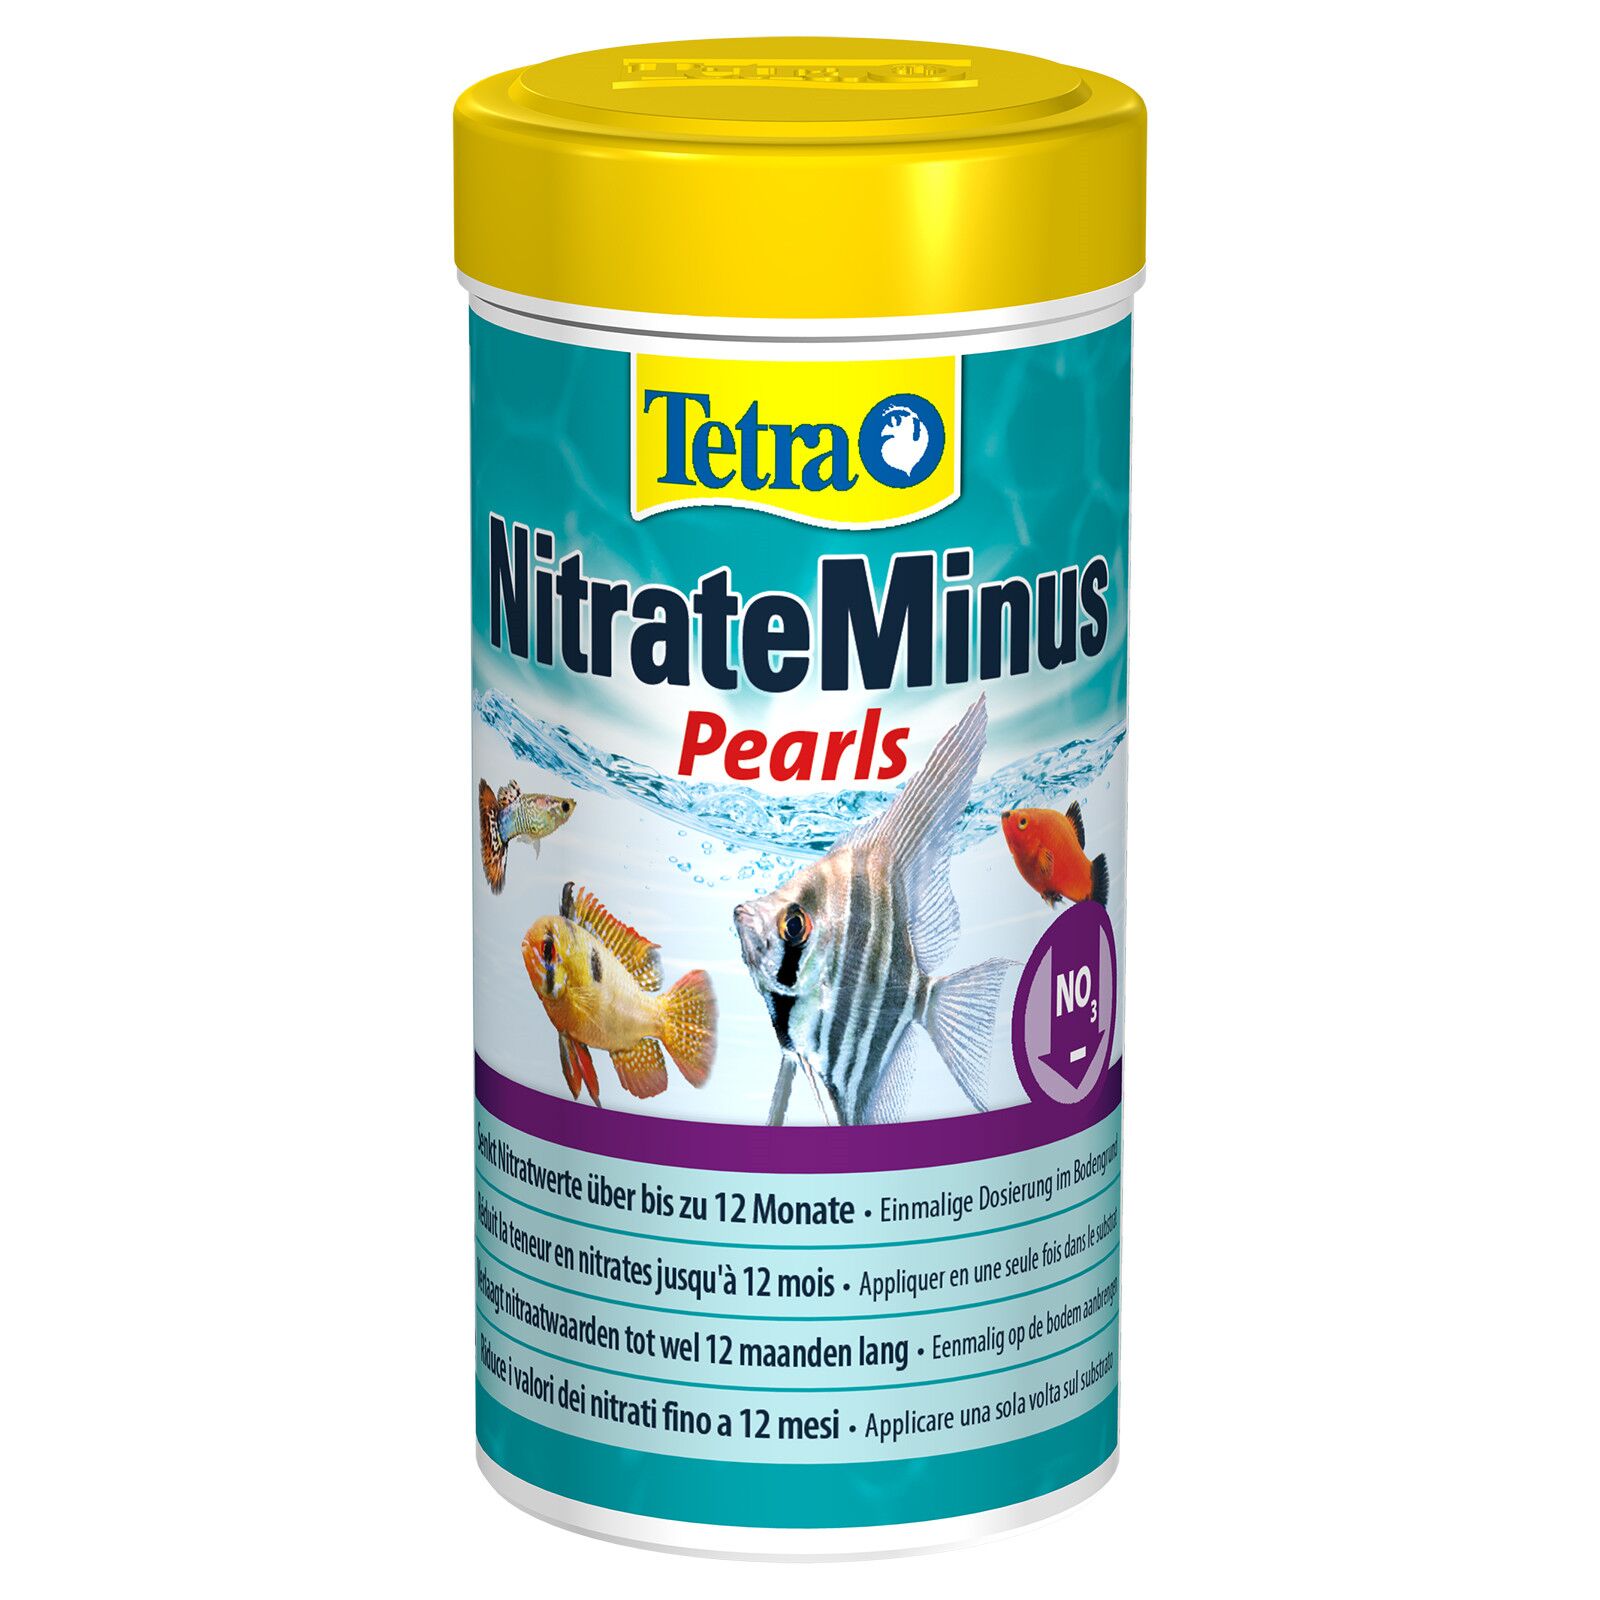 Tetra - NitrateMinus Pearls